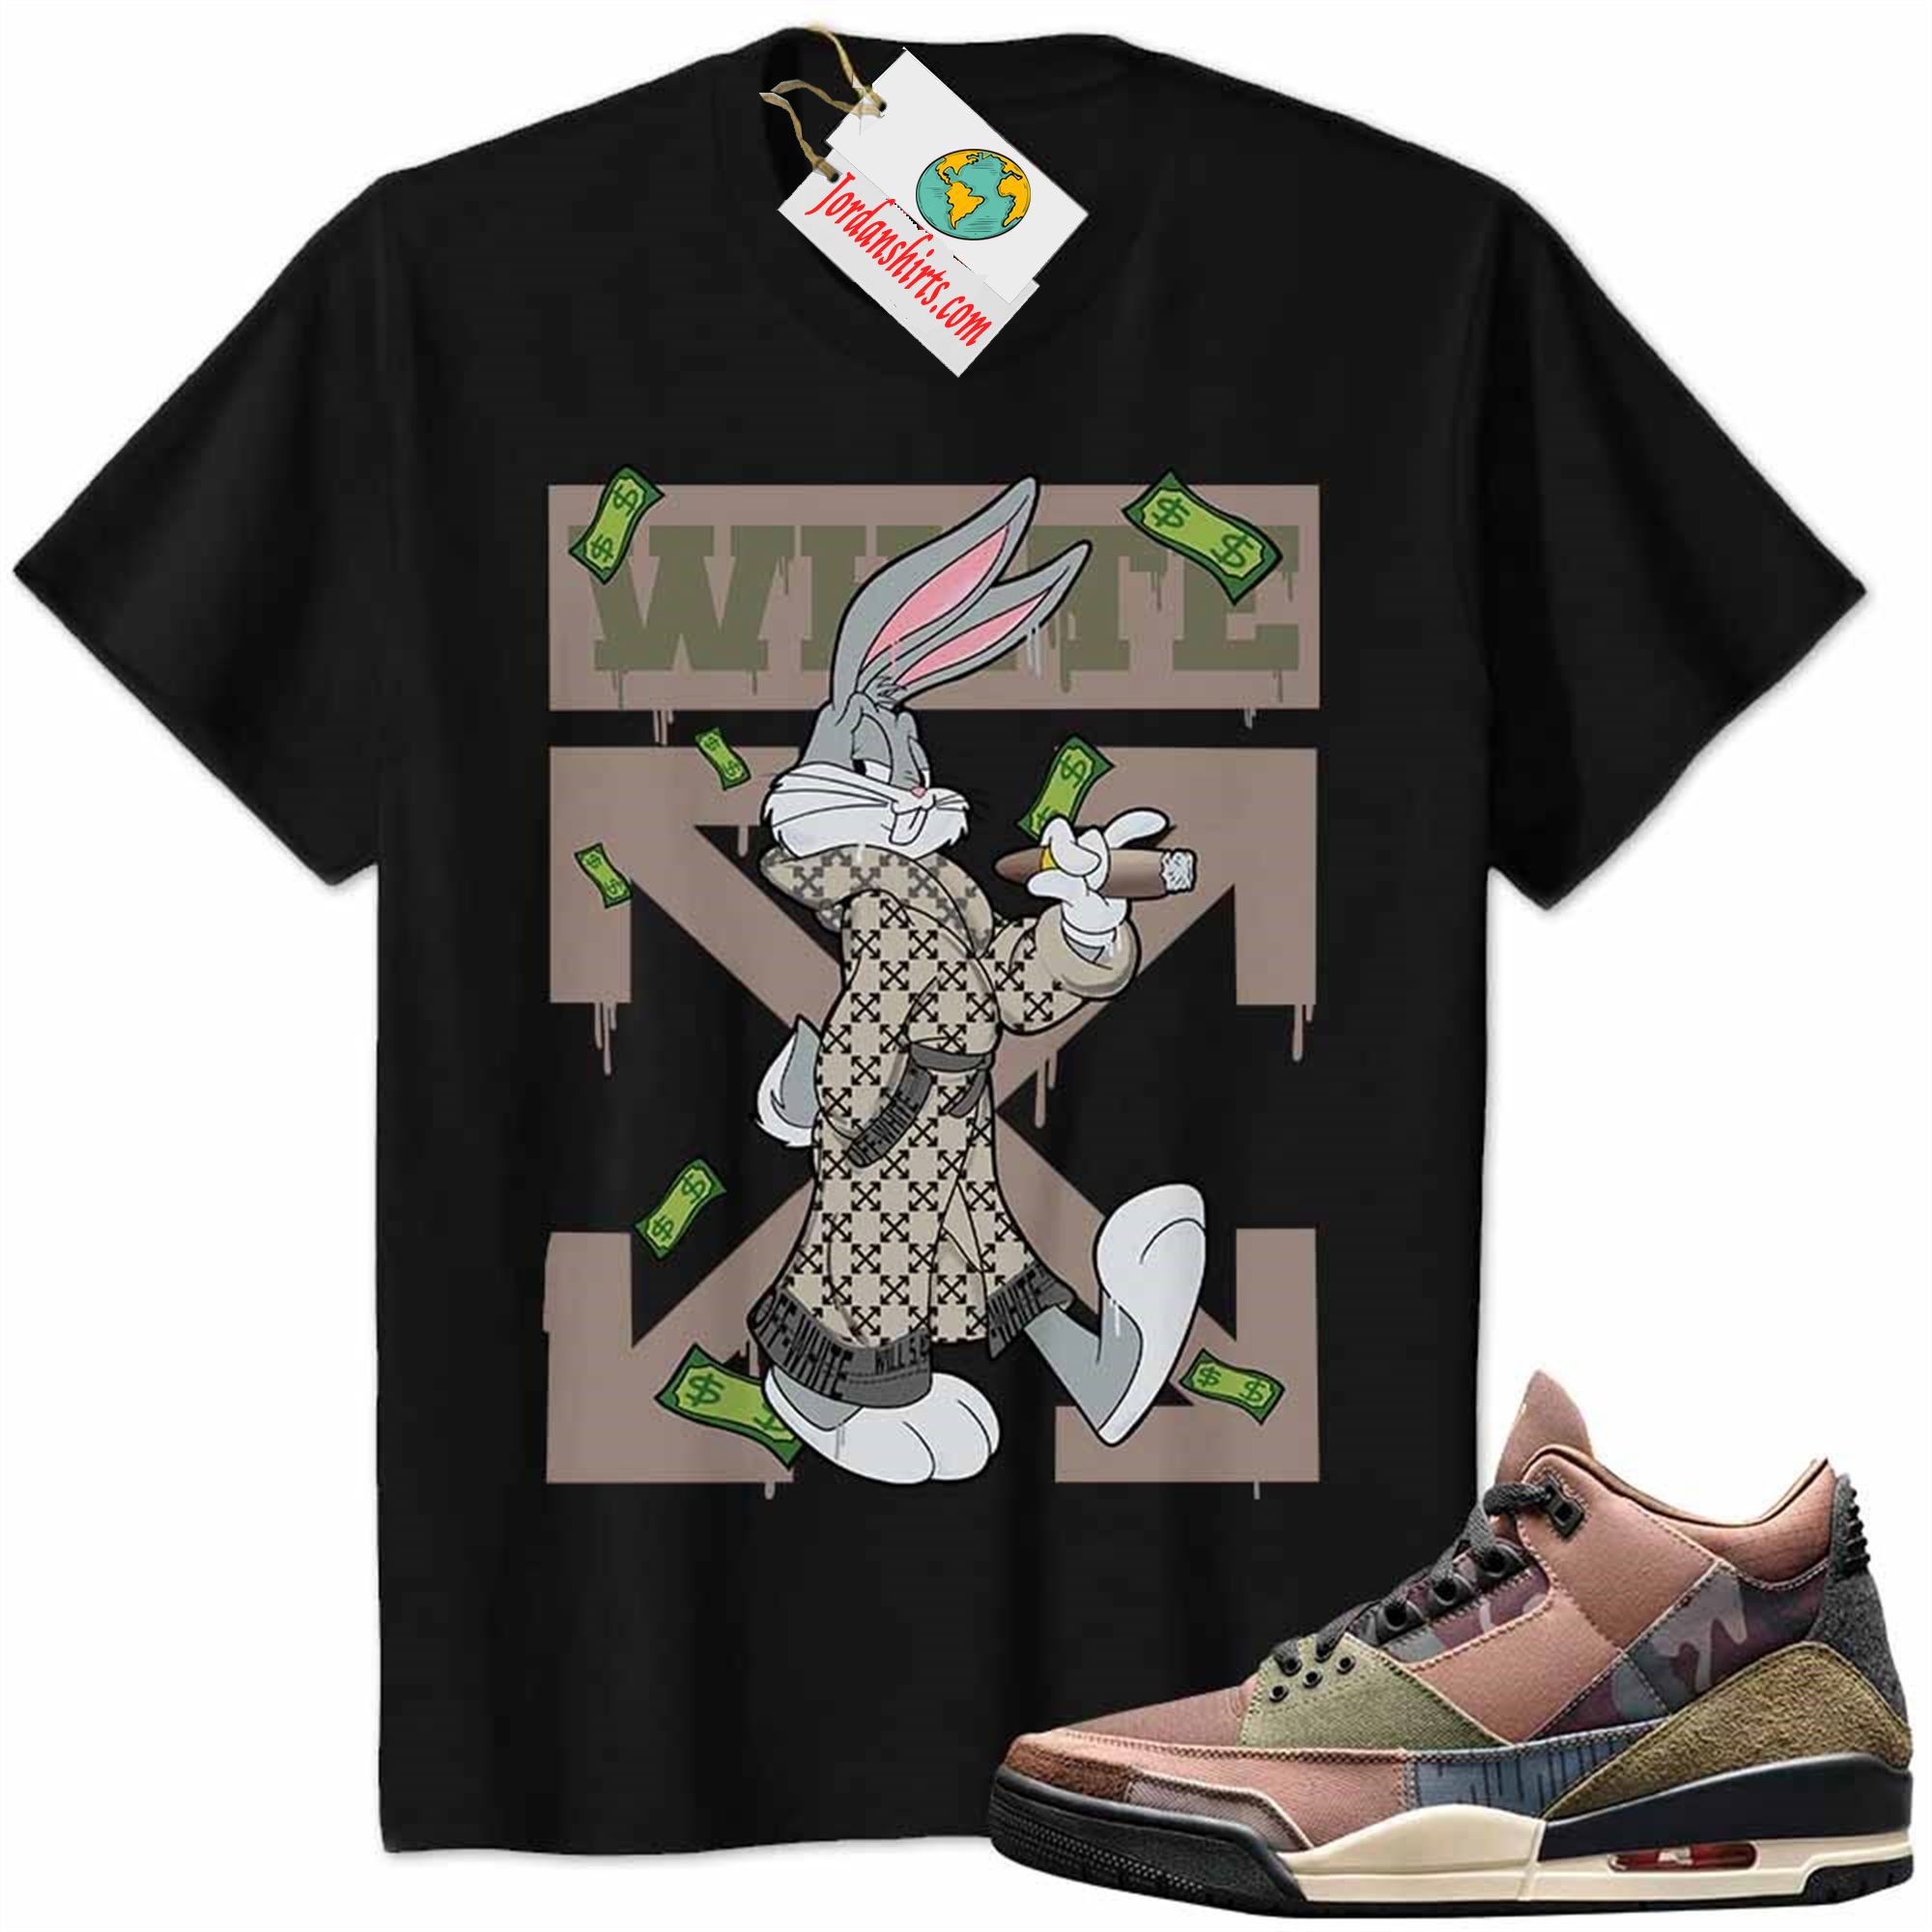 Jordan 3 Shirt, Jordan 3 Patchwork Shirt Bug Bunny Smokes Weed Money Falling Black Plus Size Up To 5xl